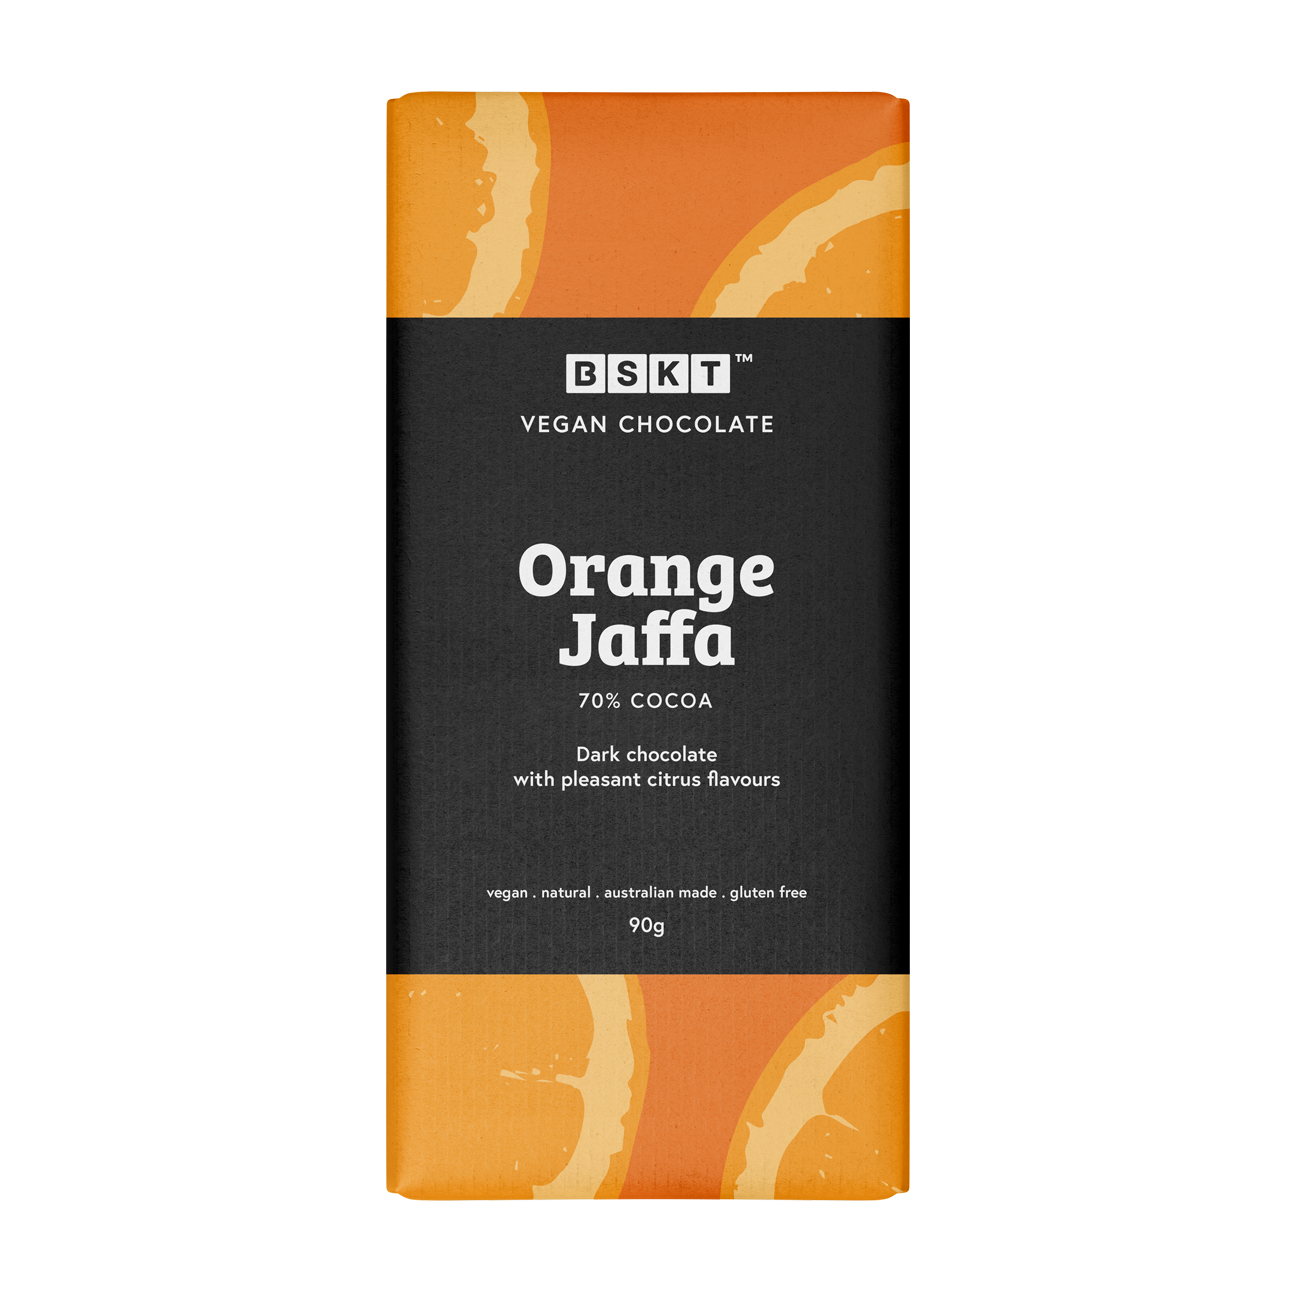 Vegan Chocolate Block that is gluten free chocolate. Orange Jaffa 70% dark chocolate citrus